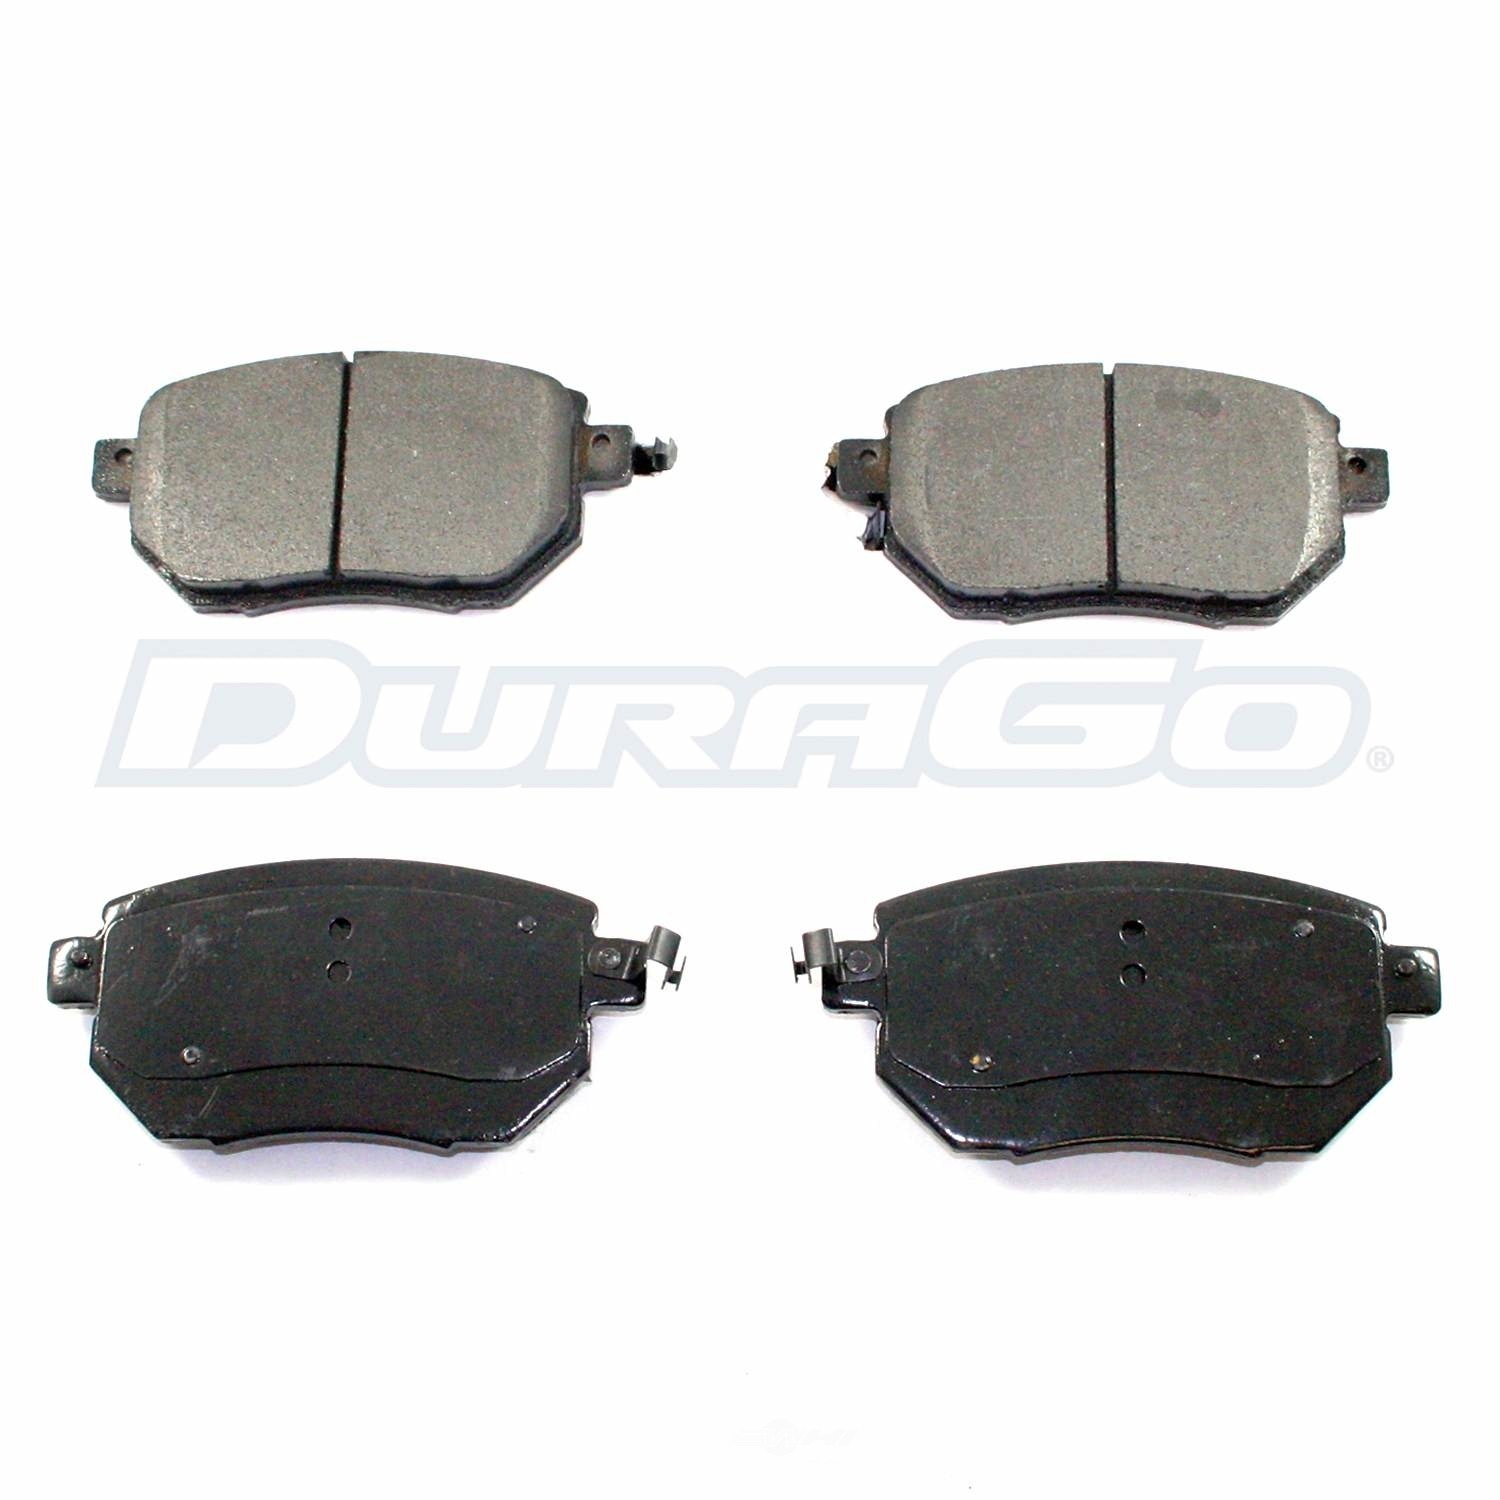 DURAGO - Disc Brake Pad (Front) - D48 BP969MS